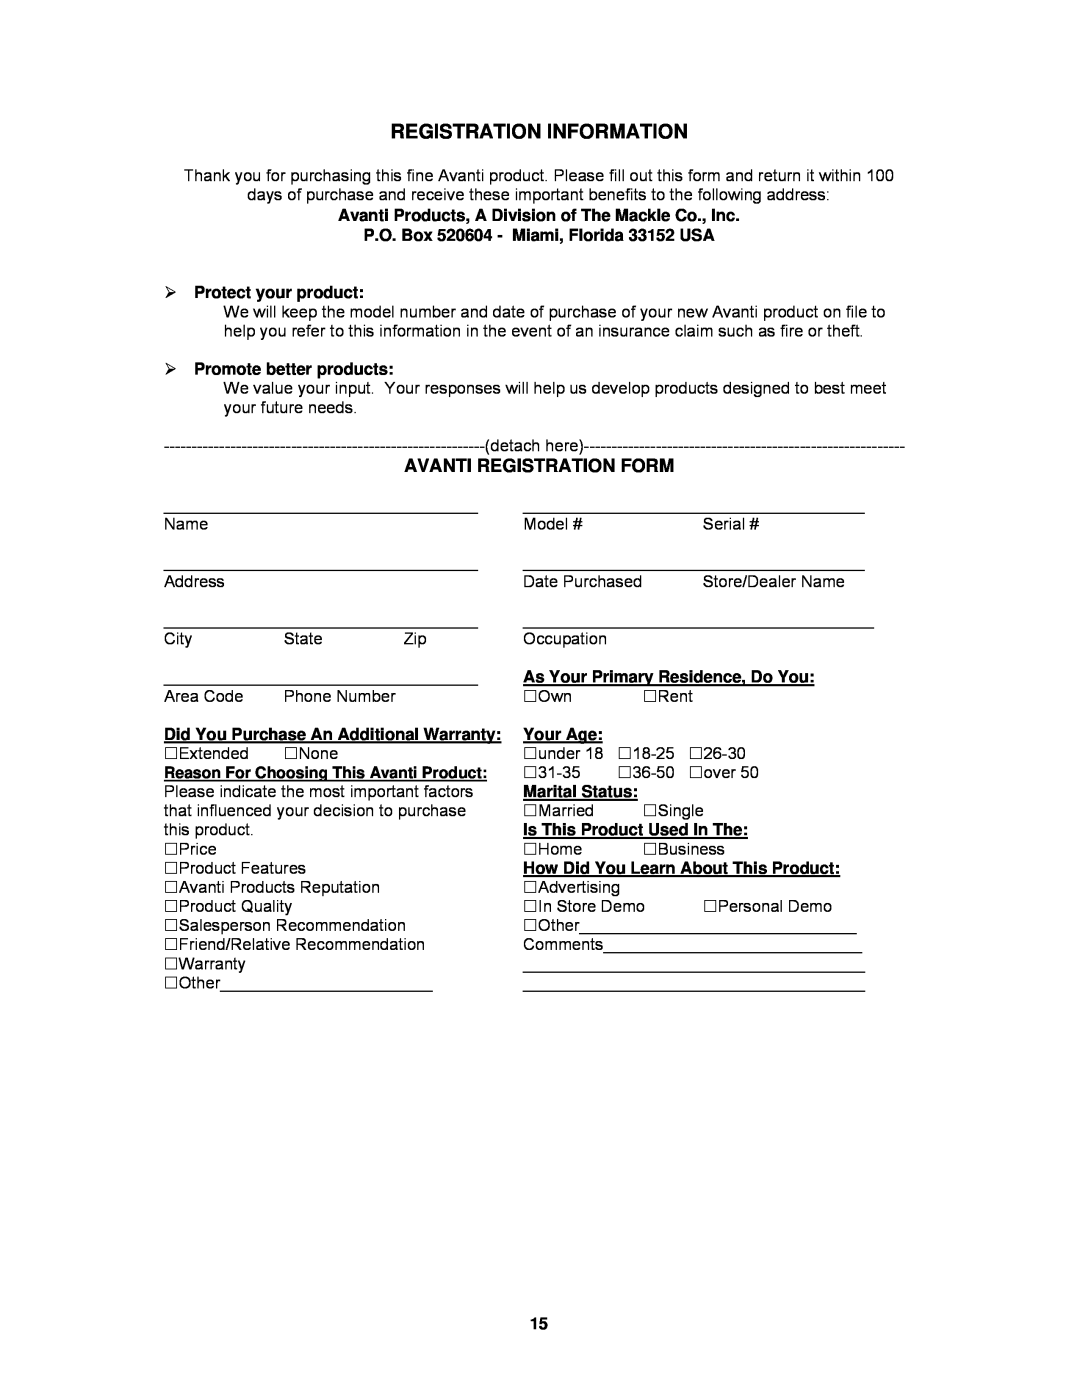 Avanti EWC6SS Registration Information, Avanti Registration Form, P.O. Box 520604 - Miami, Florida 33152 USA, Your Age 